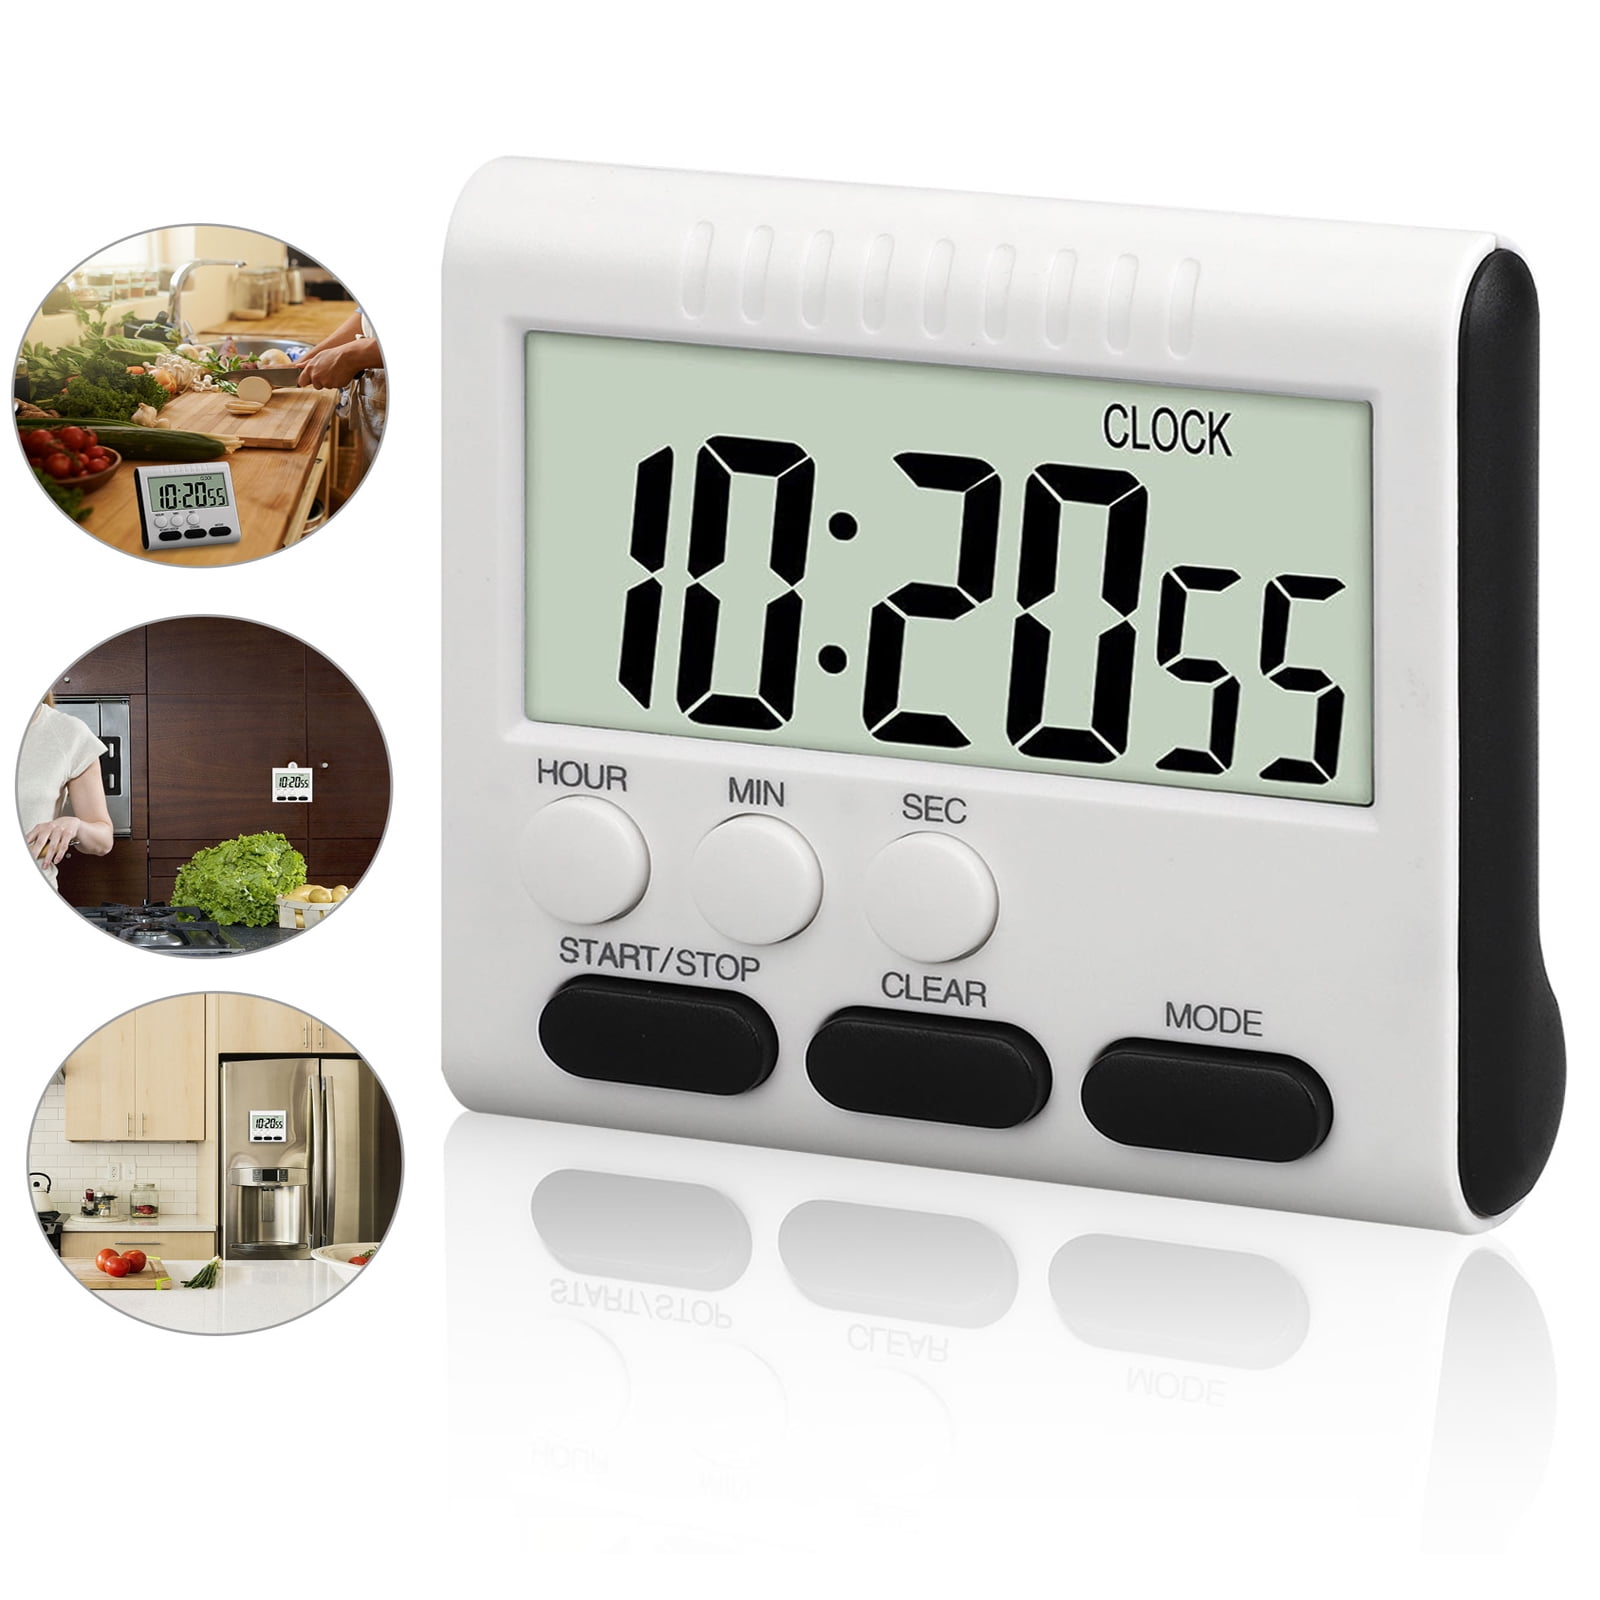 Digital Kitchen TIMER for kitchen baking cooking countdown big digit alarm clock